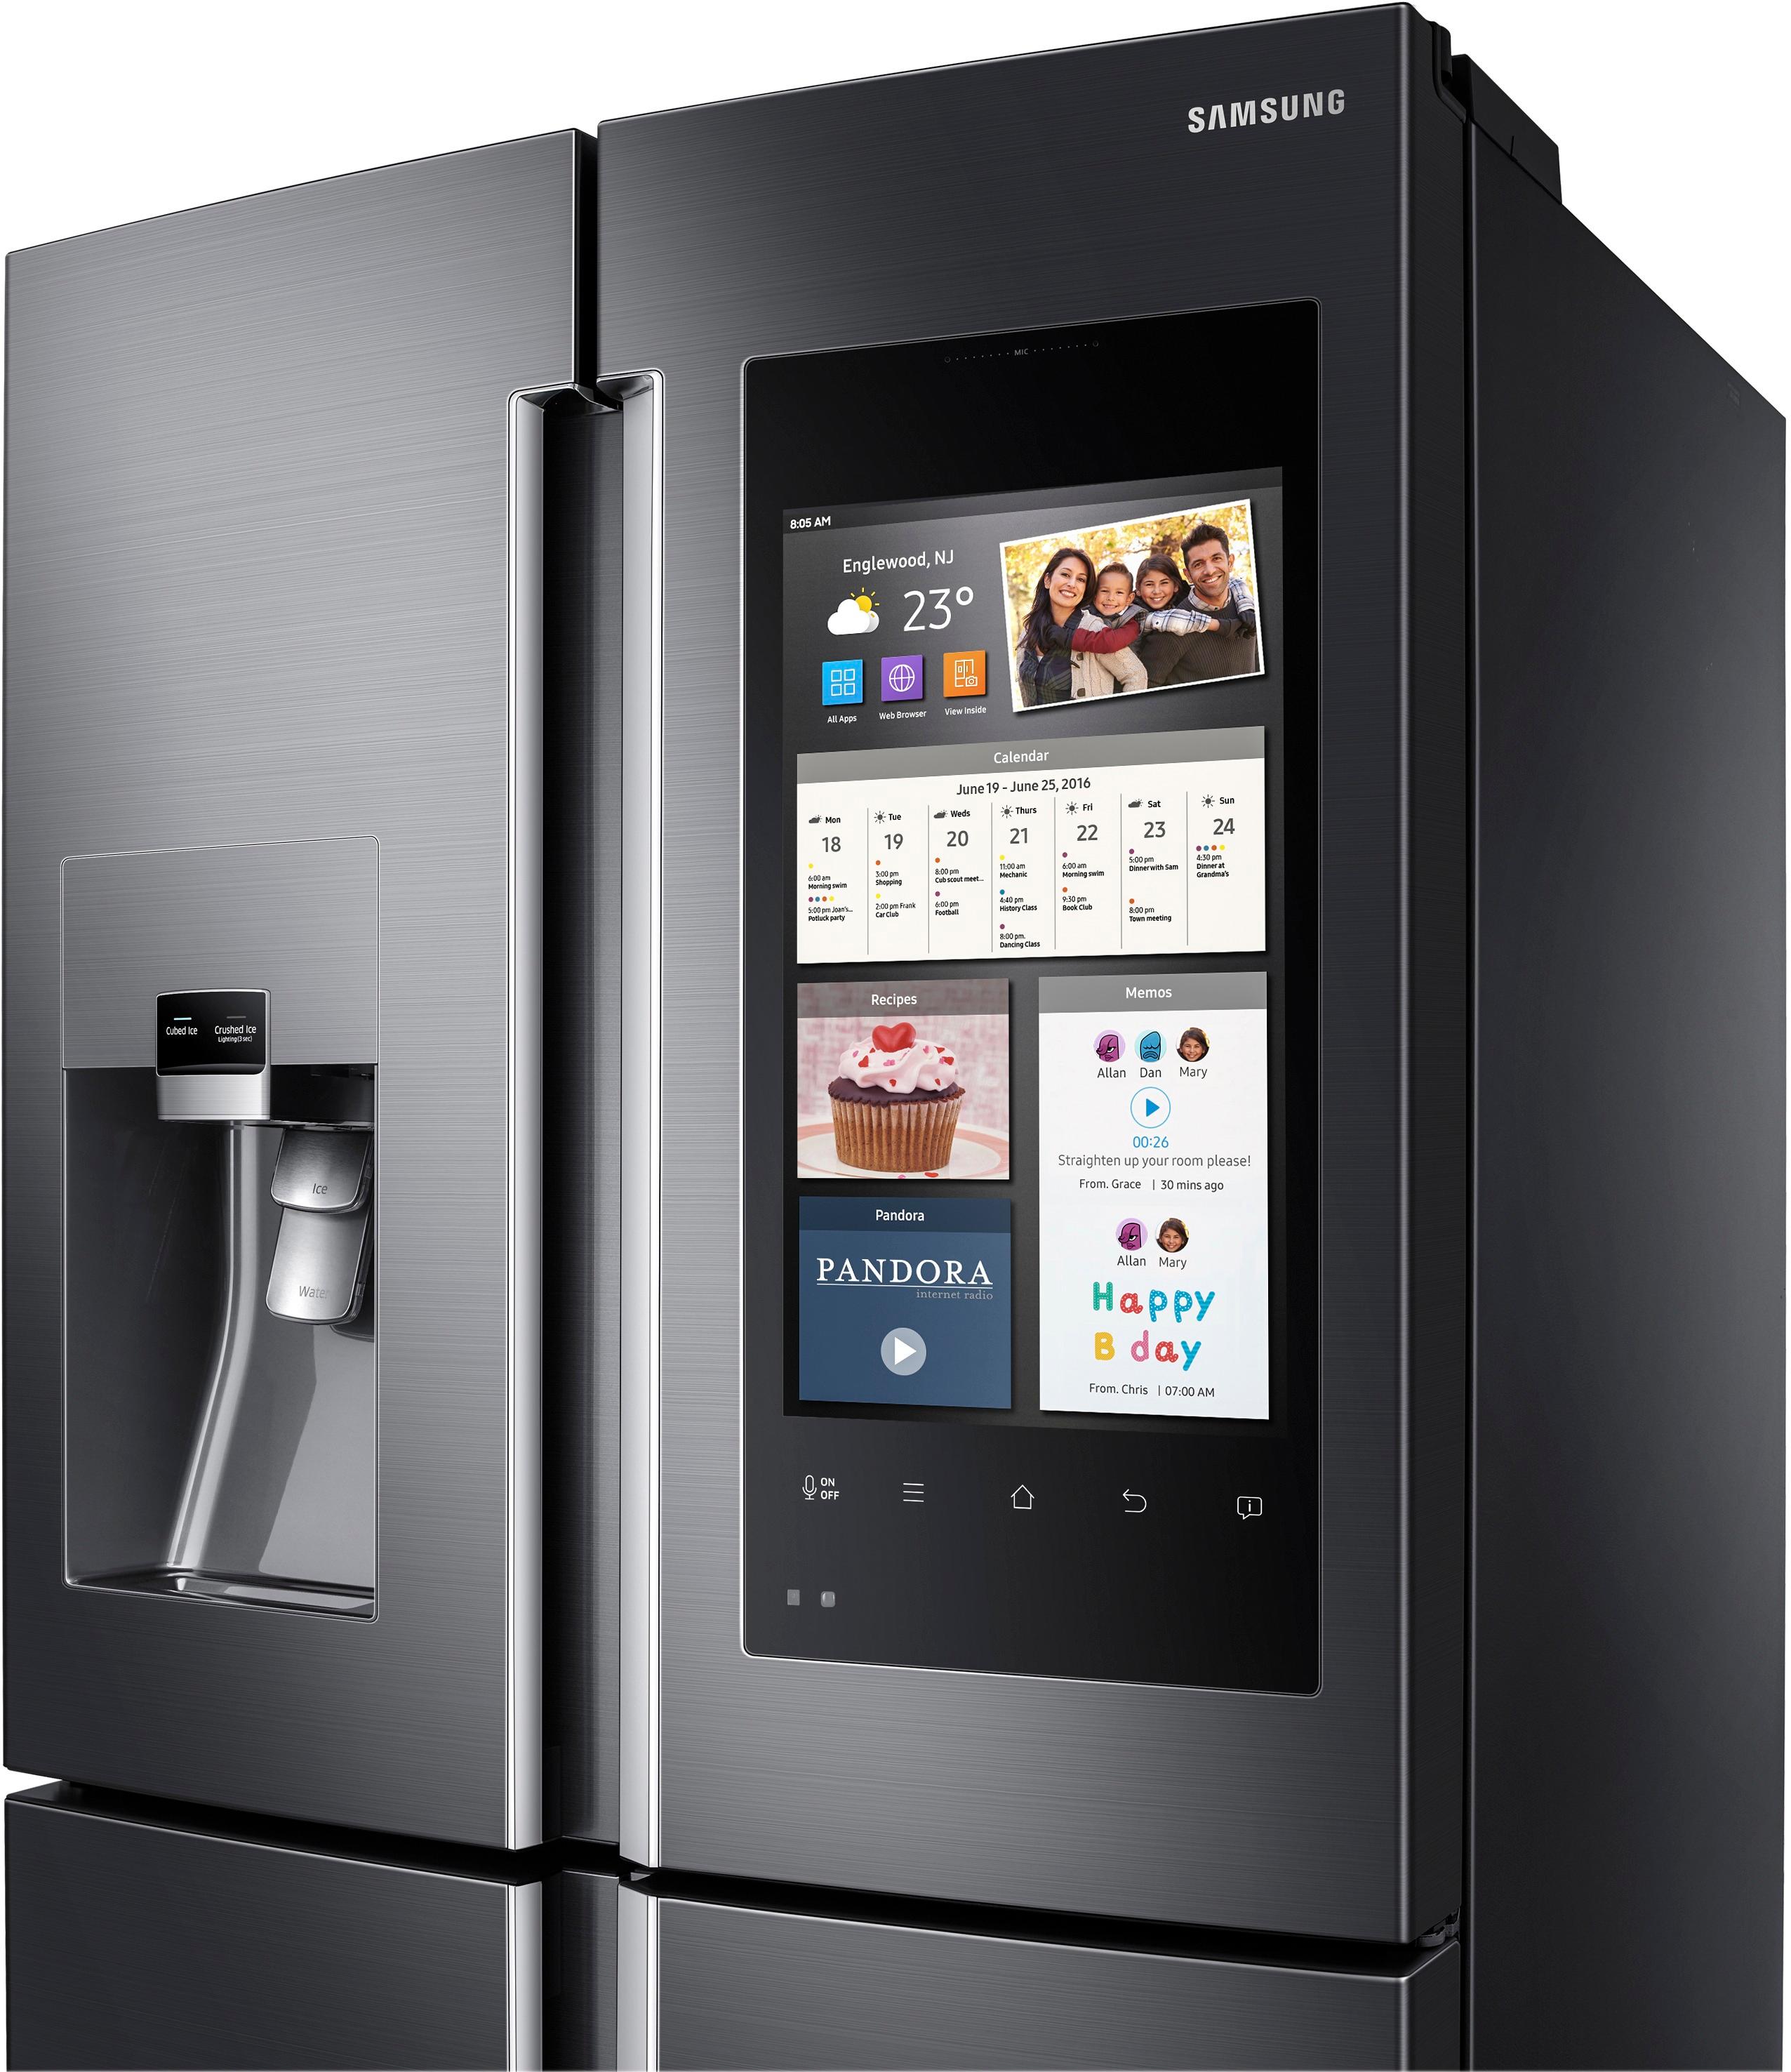 Samsung, Whirlpool bank on smart fridge renaissance - Products - IoT Hub